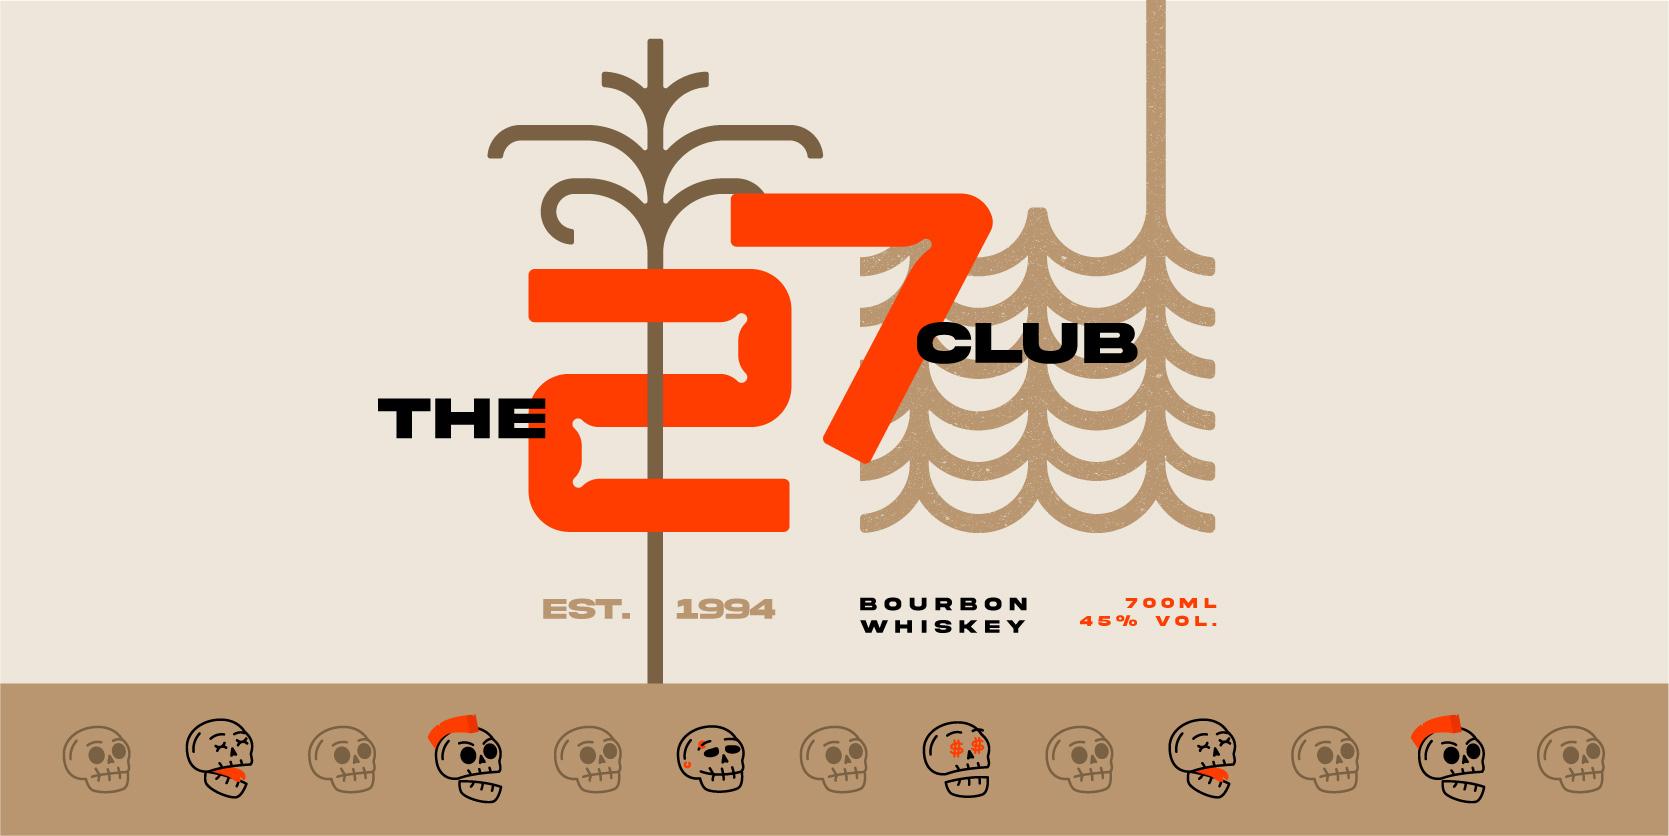 The 27 Club 2